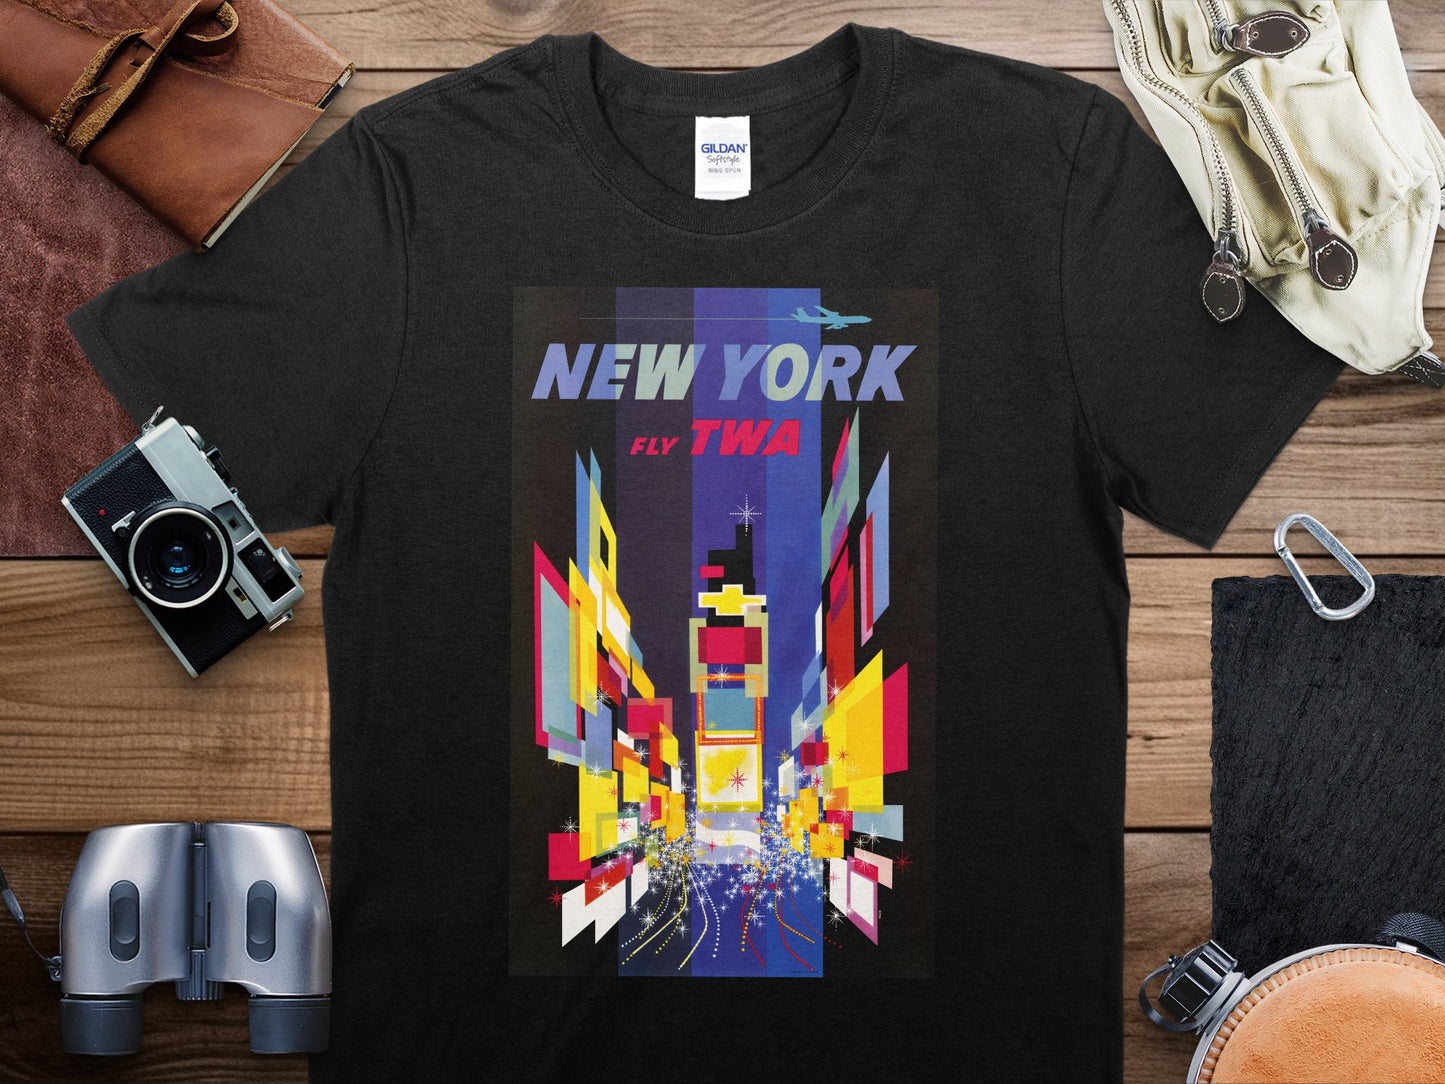 Vintage New York Fly TWA T-Shirt, New York Fly TWA Travel Shirt